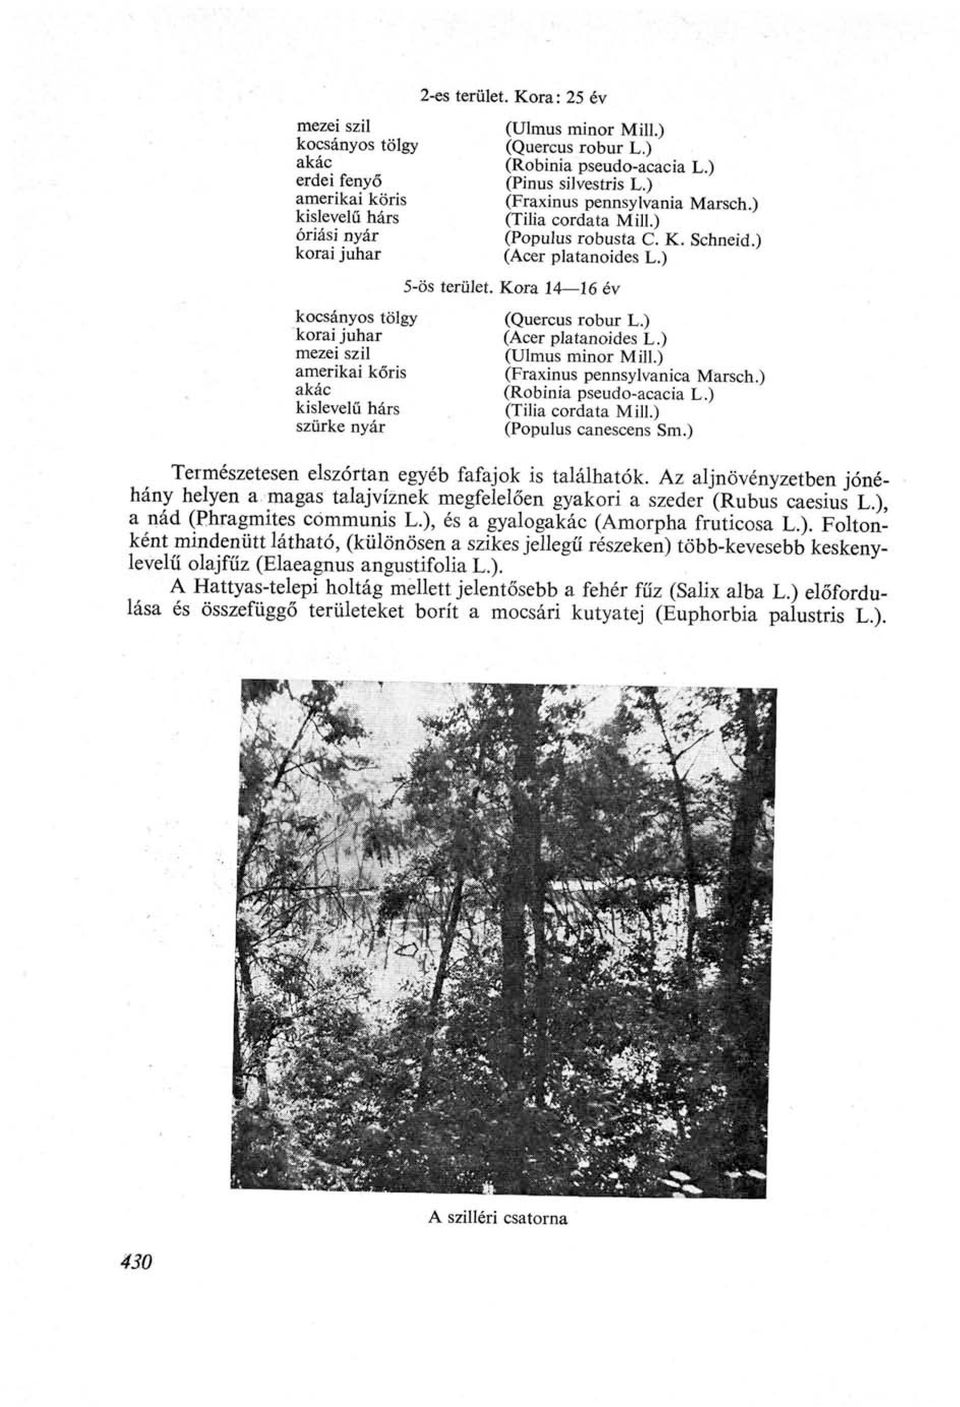 ) (Acer platanoides L.) 5-ös terület. Kora 14 16 év (Quercus robur L.) (Acer platanoides L.) (Ulmus minor Mill.) (Fraxinus pennsylvanica Marsch.) (Robinia pseudo-acacia L.) (Tilia cordata Mill.